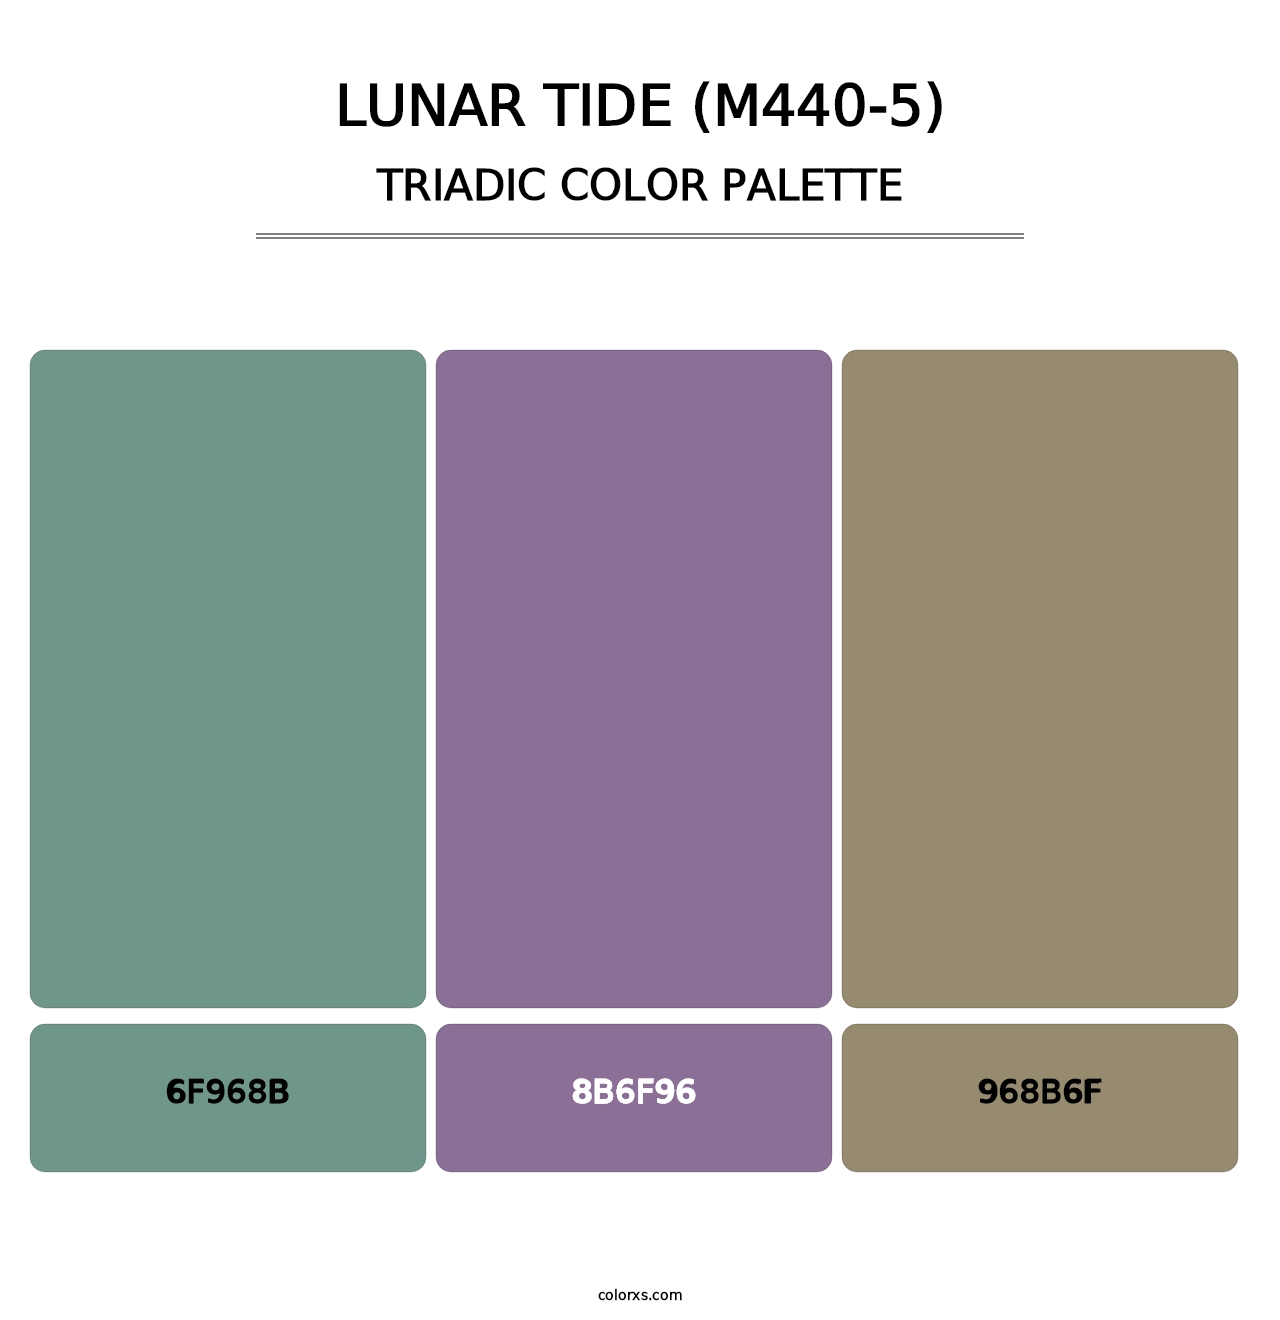 Lunar Tide (M440-5) - Triadic Color Palette